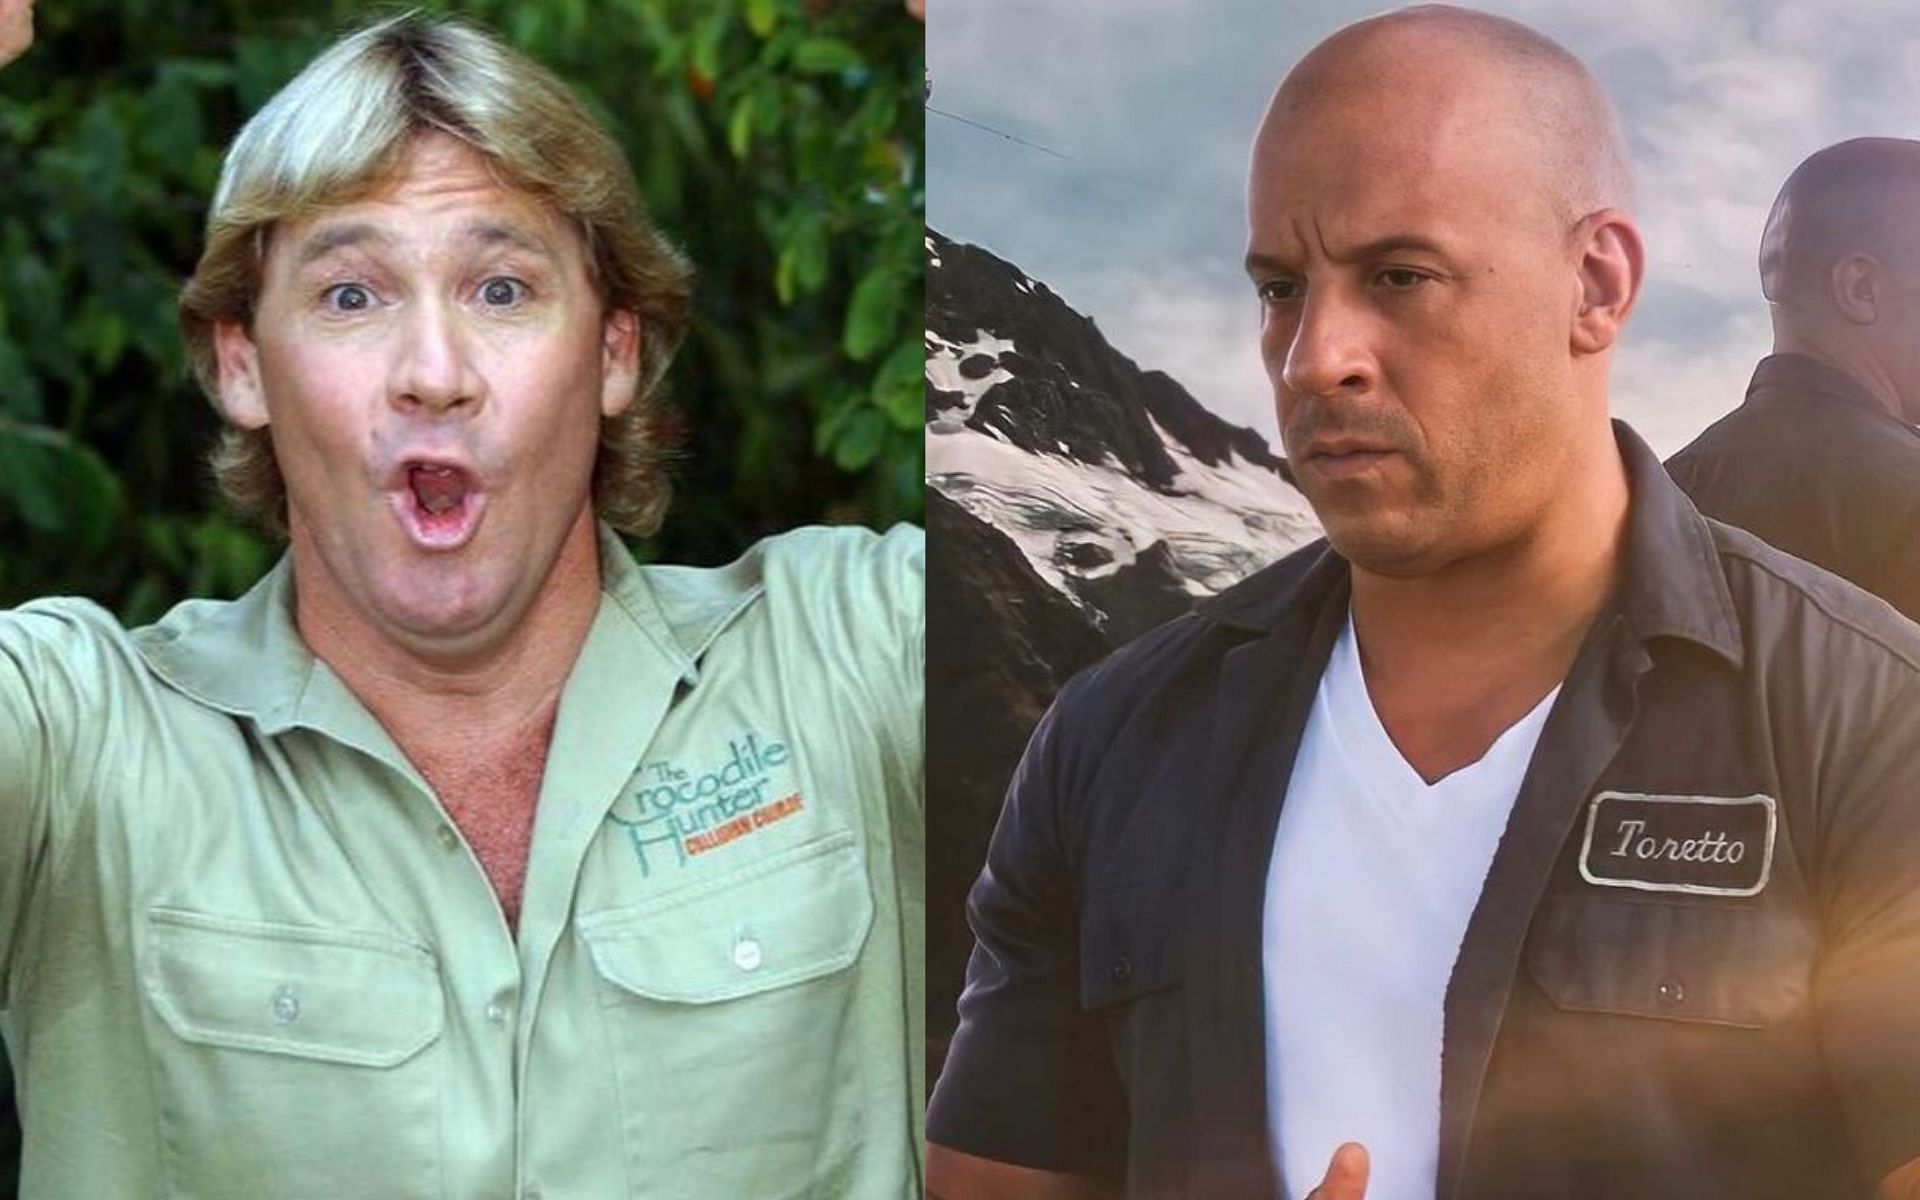 Steve Irwin (left), Vin Diesel (right) [Images via @vindiesel and @steve_irwin2020 on Instagram]